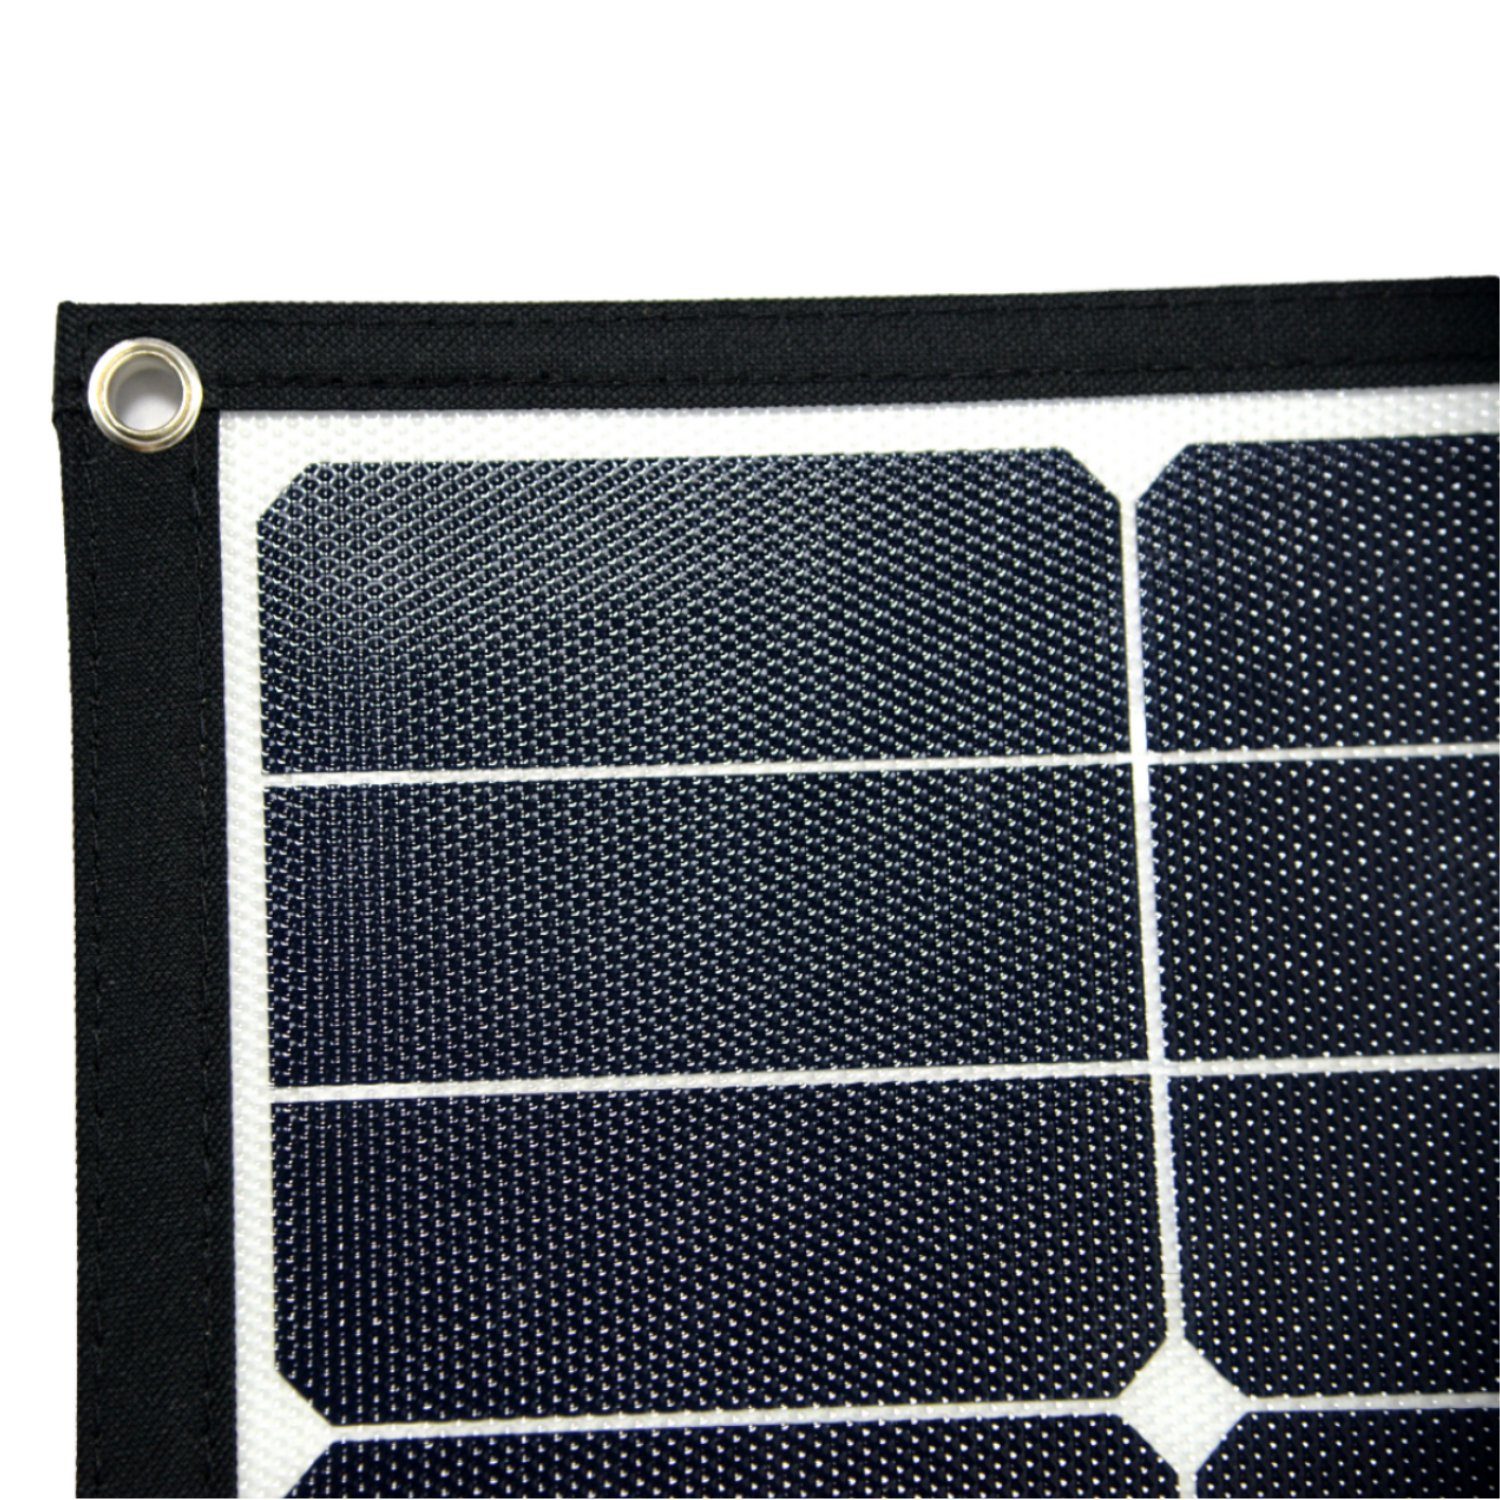 offgridtec Solarmodul Offgridtec FSP-2 MPPT KIT 15A 225W Ultra